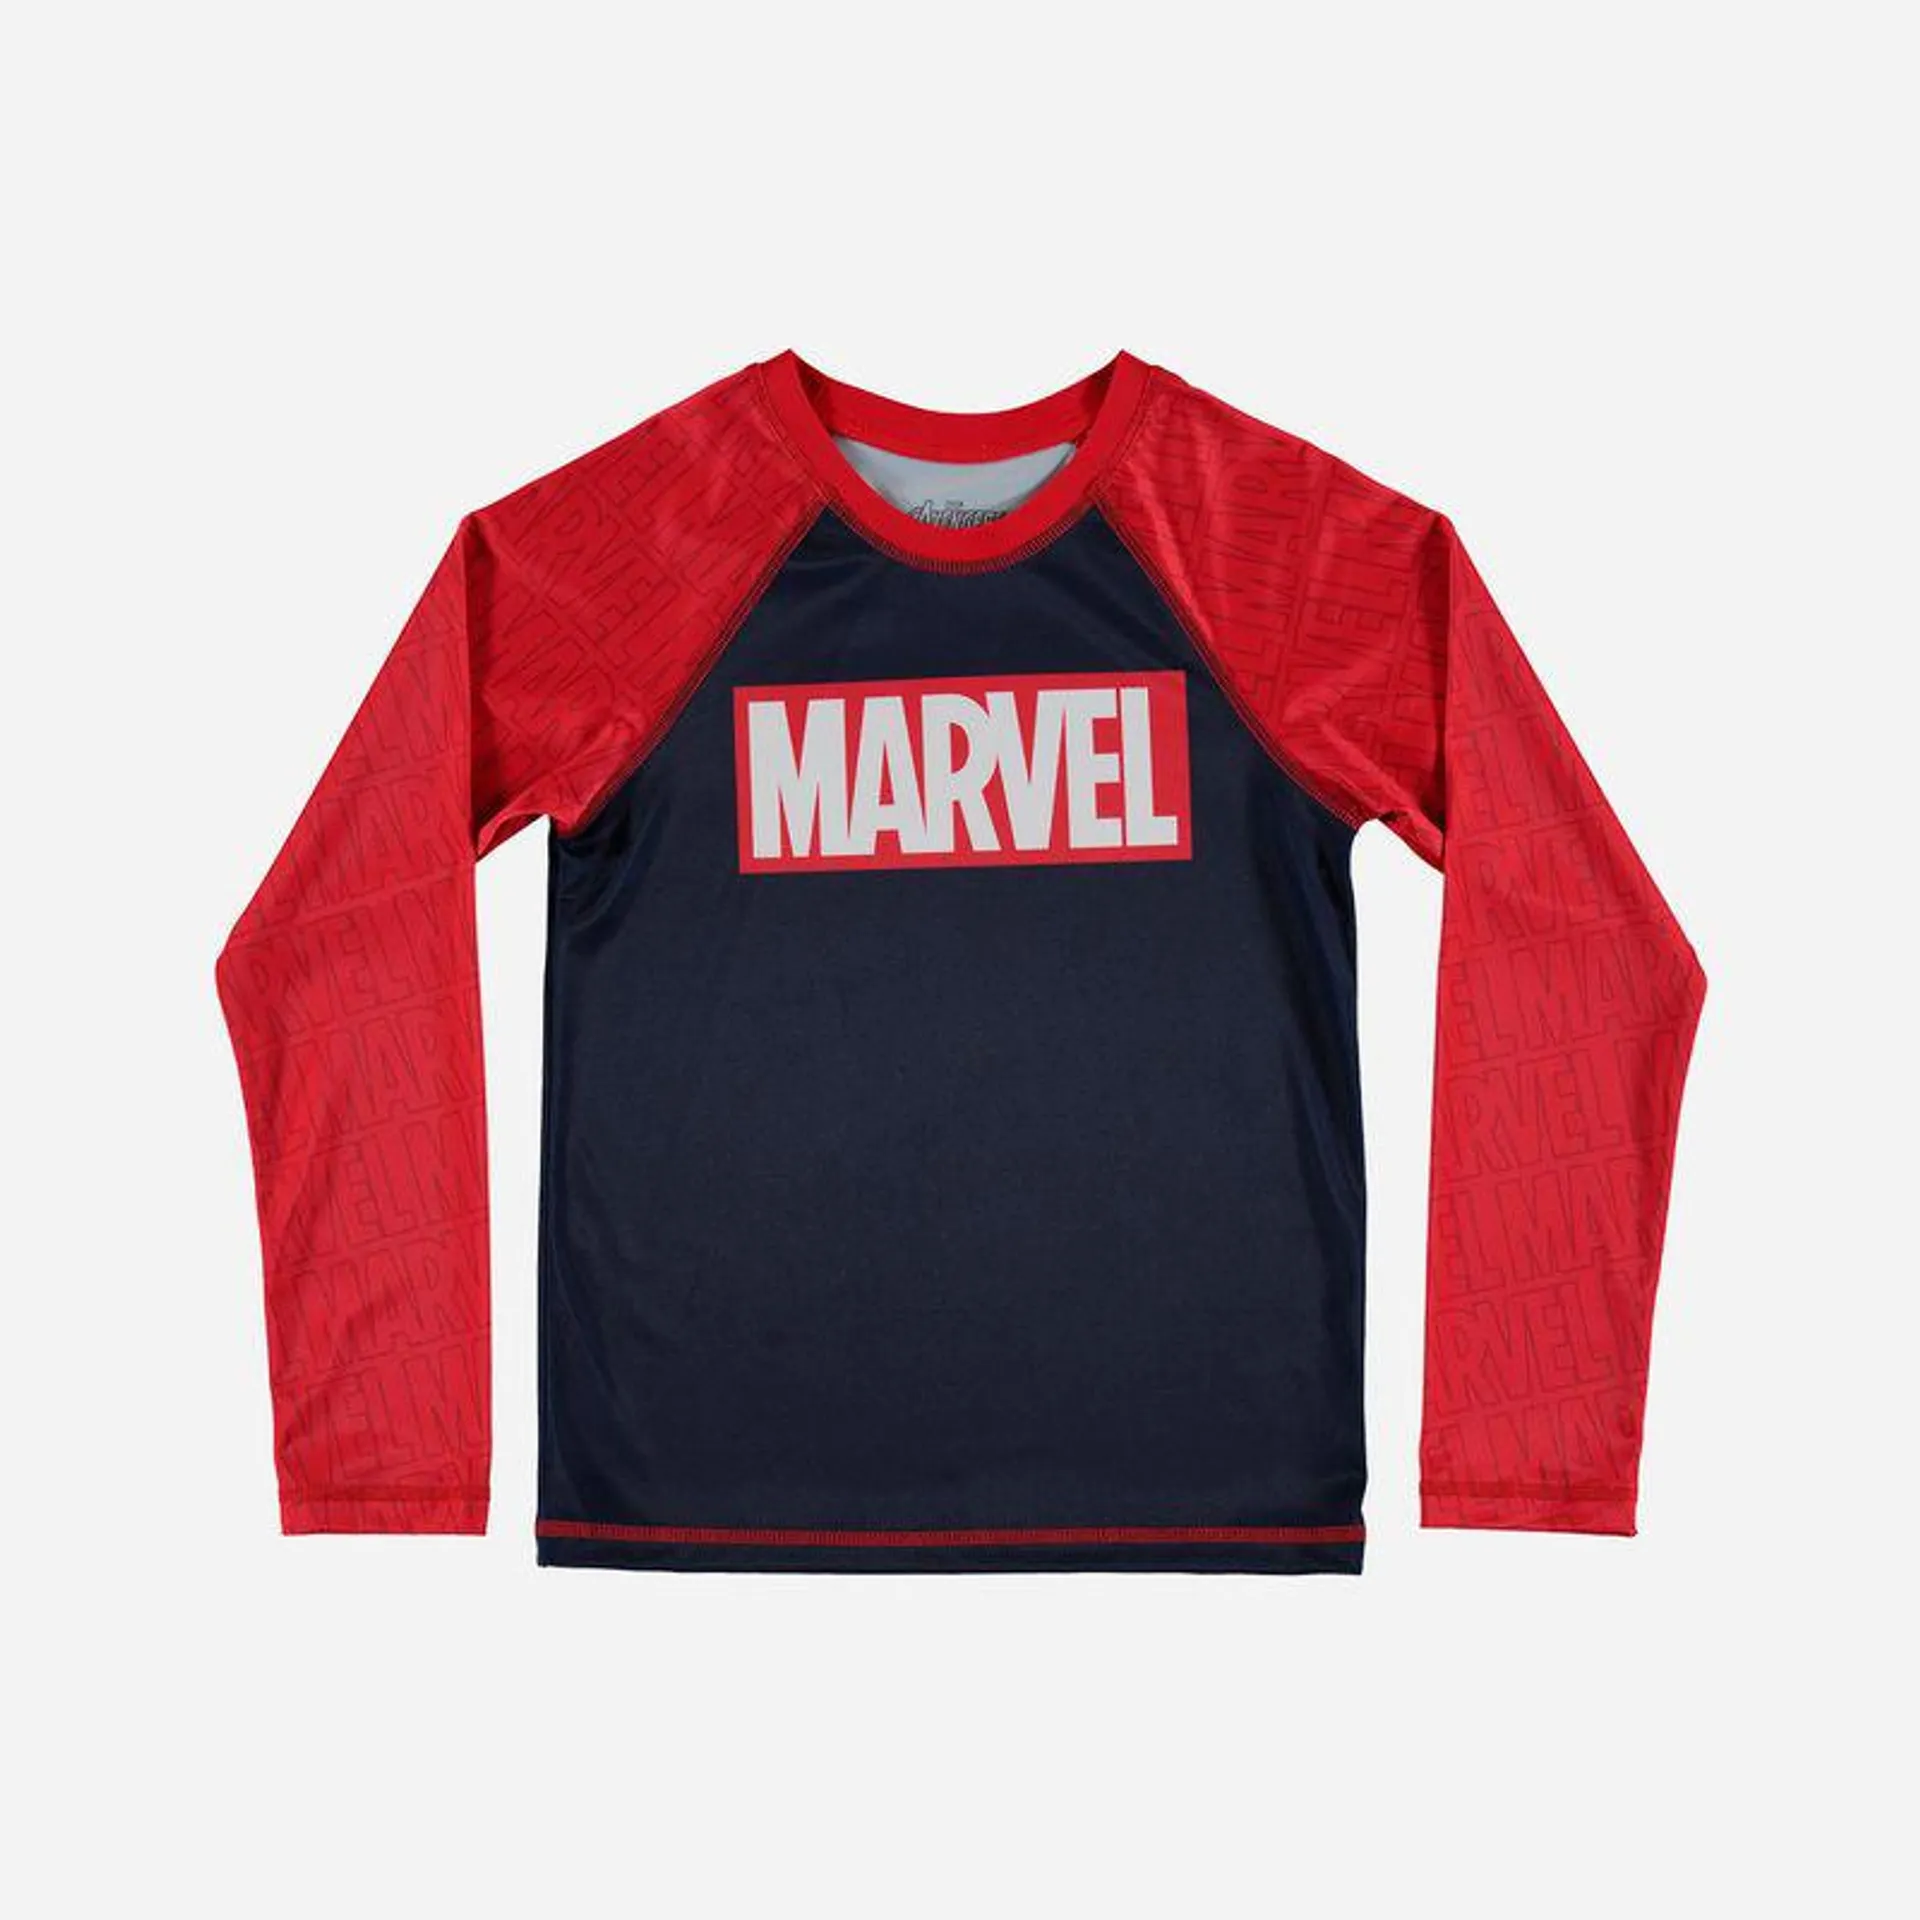 Camiseta Baño Niño Marvel